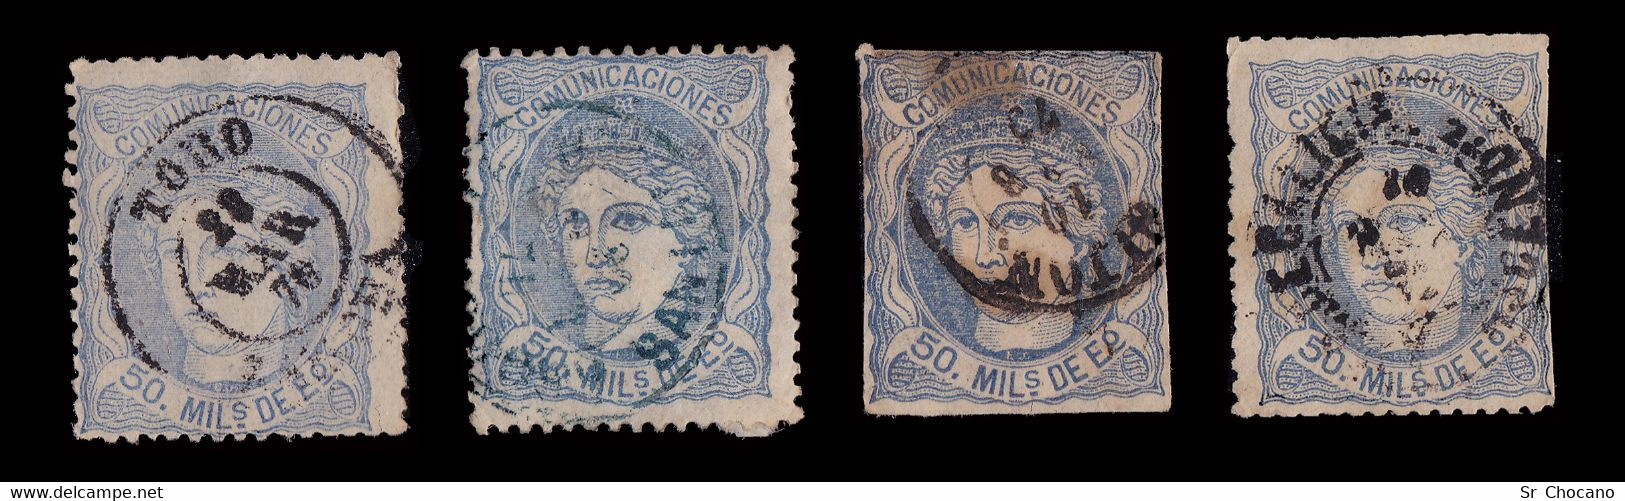 España.1870.Efigie Alegórica.50m.Lote 12 Matasello.Edifil.107 - Used Stamps